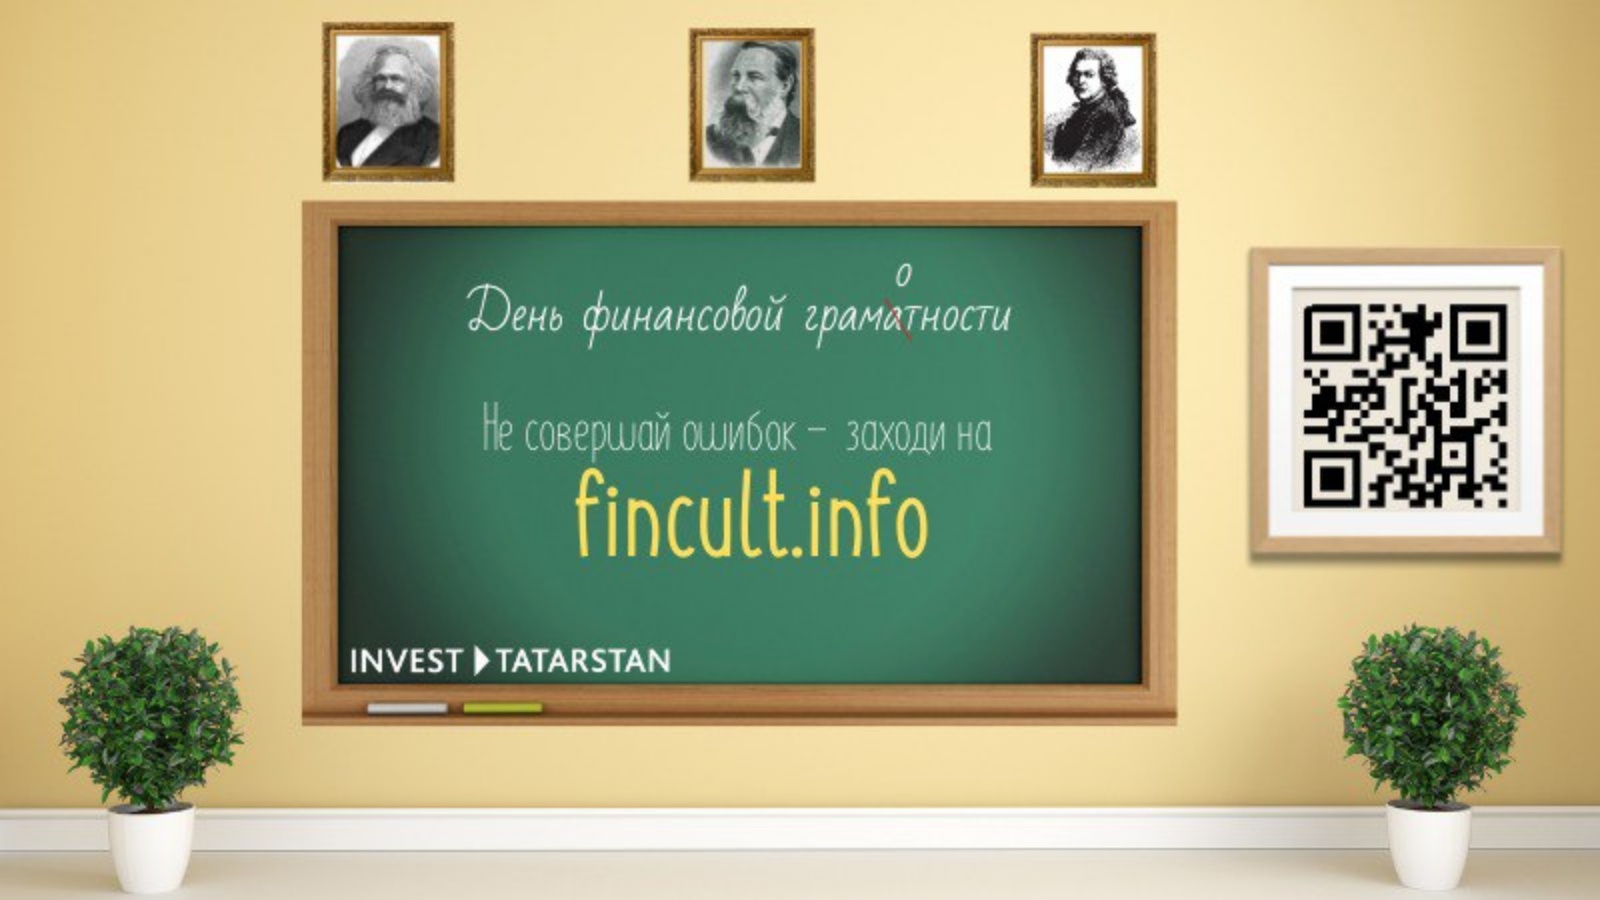 Https fincult info. Финкультинфо. Invest Tatarstan. Basewebinar@fincult.